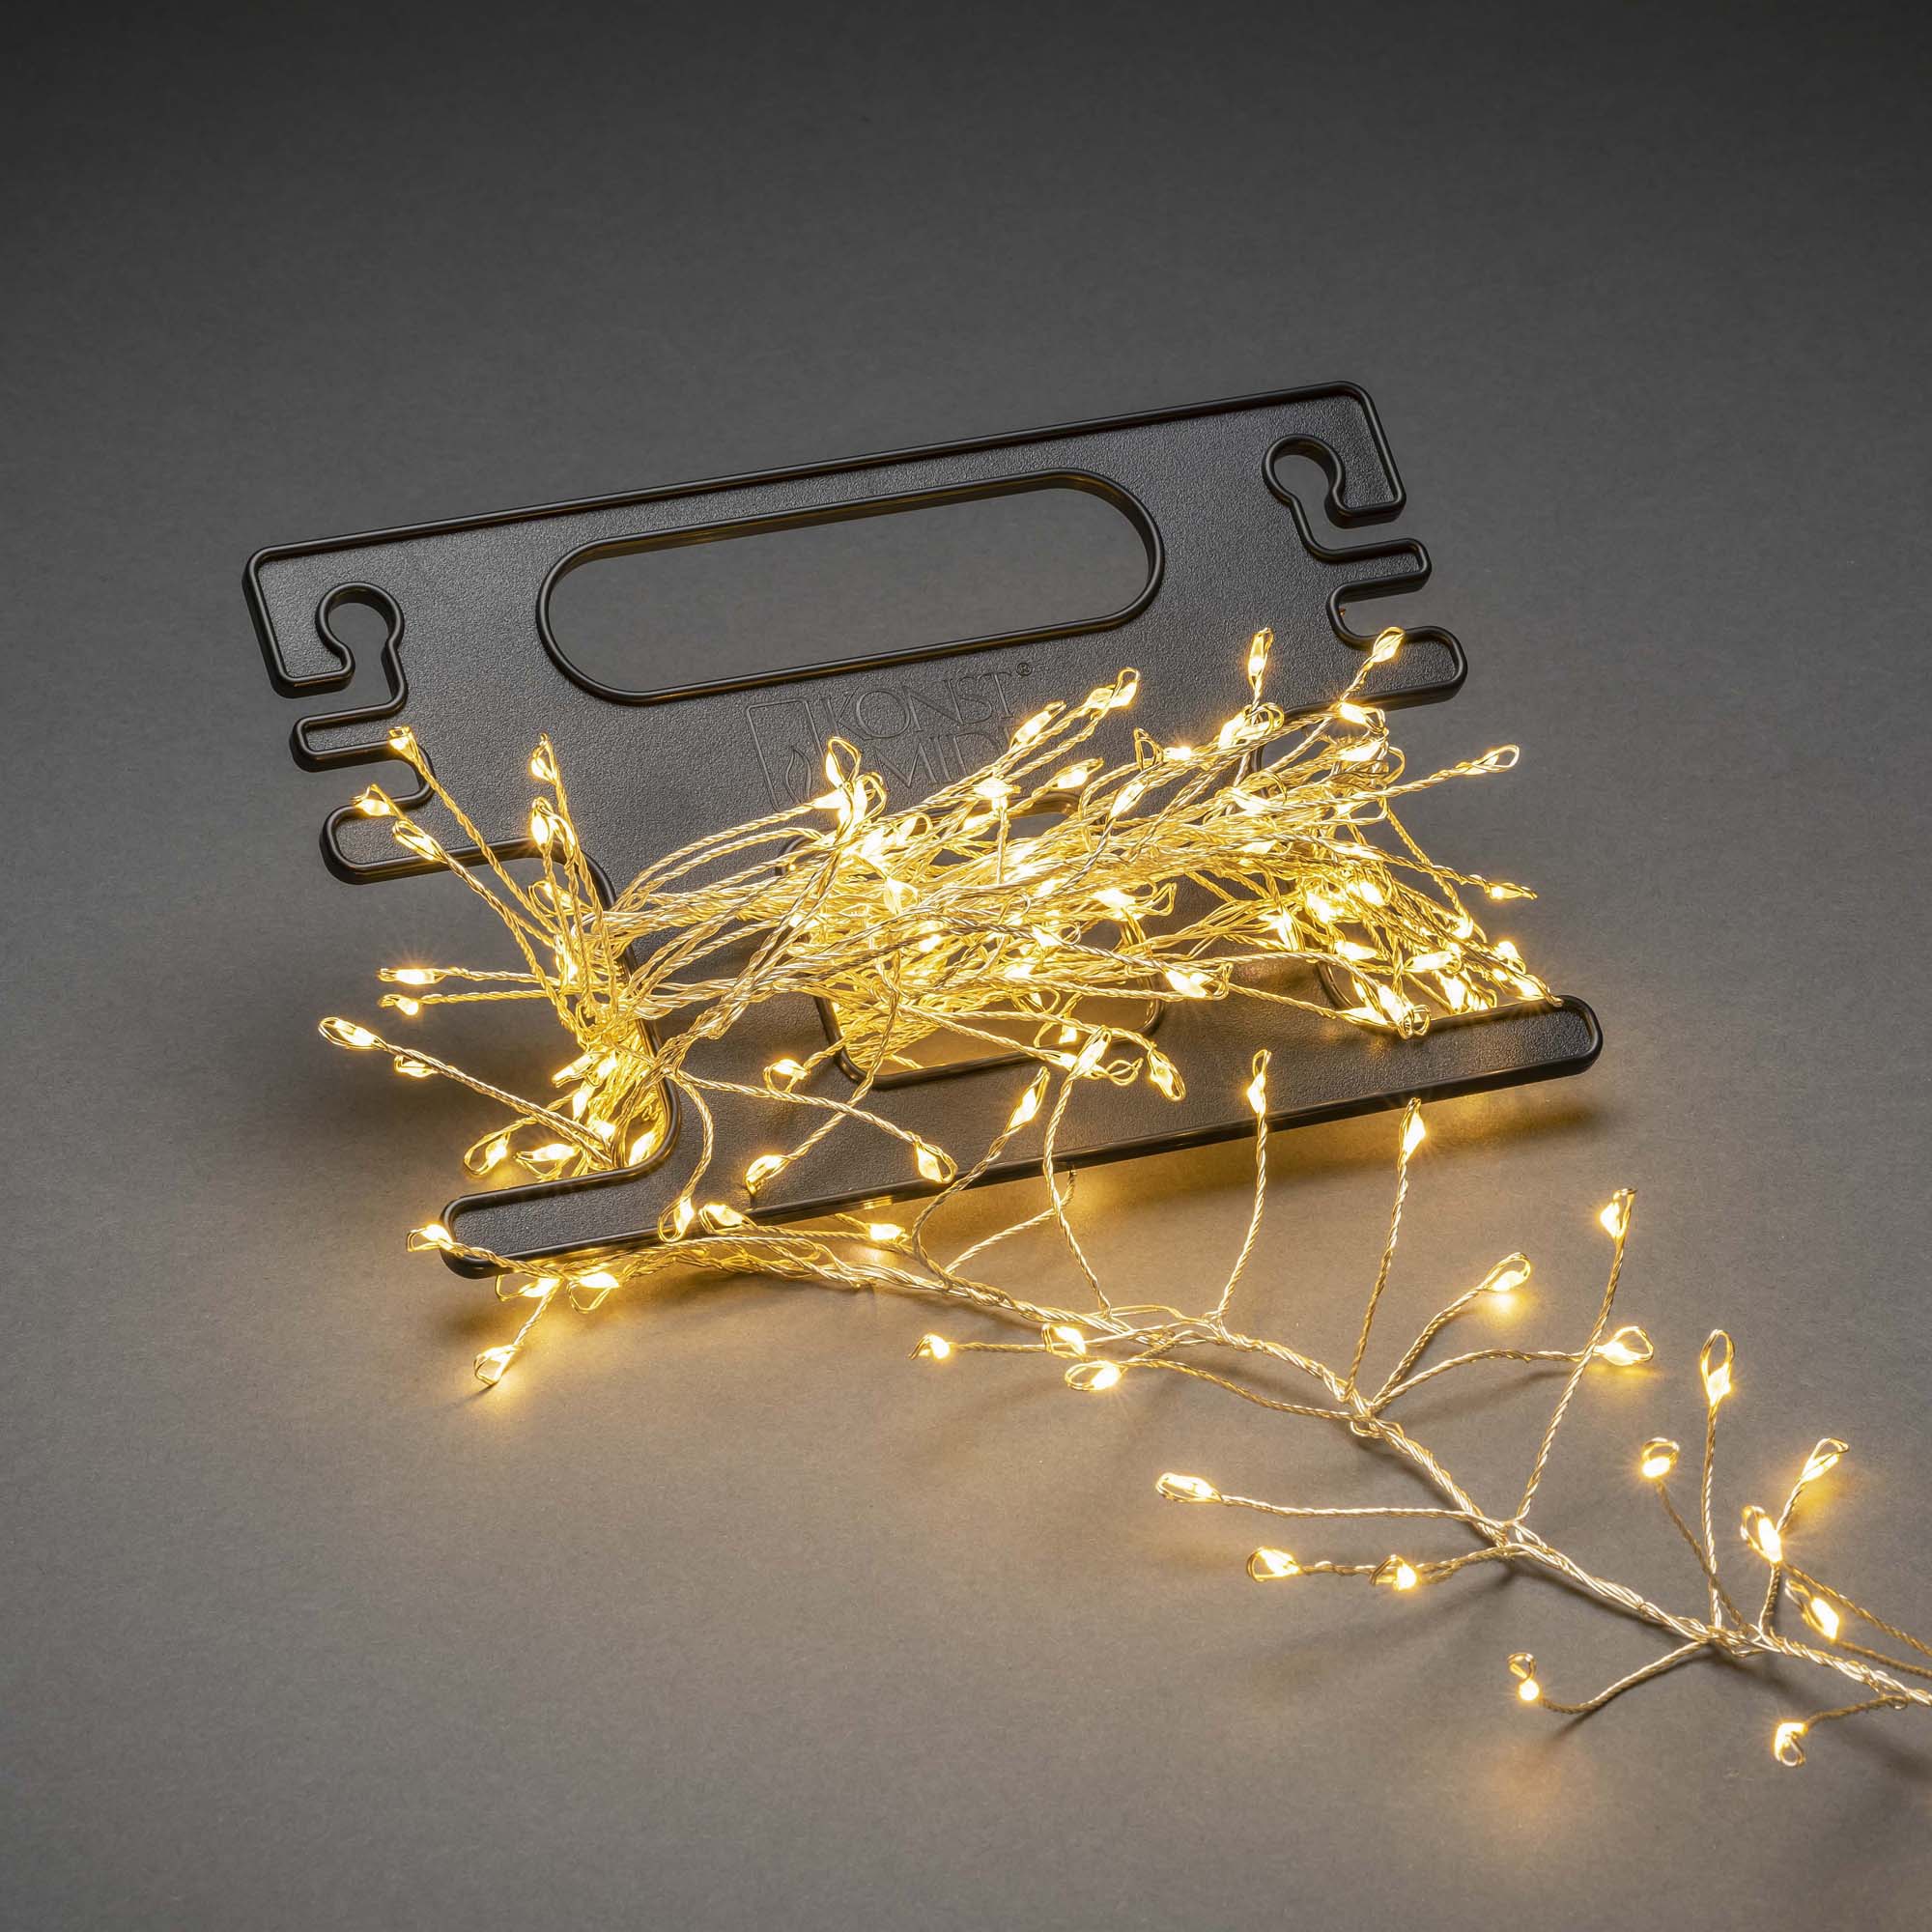 Instalatie luminoasa Konstsmide LED Light Chain Cluster amber 8.6m 400 LED argintiu